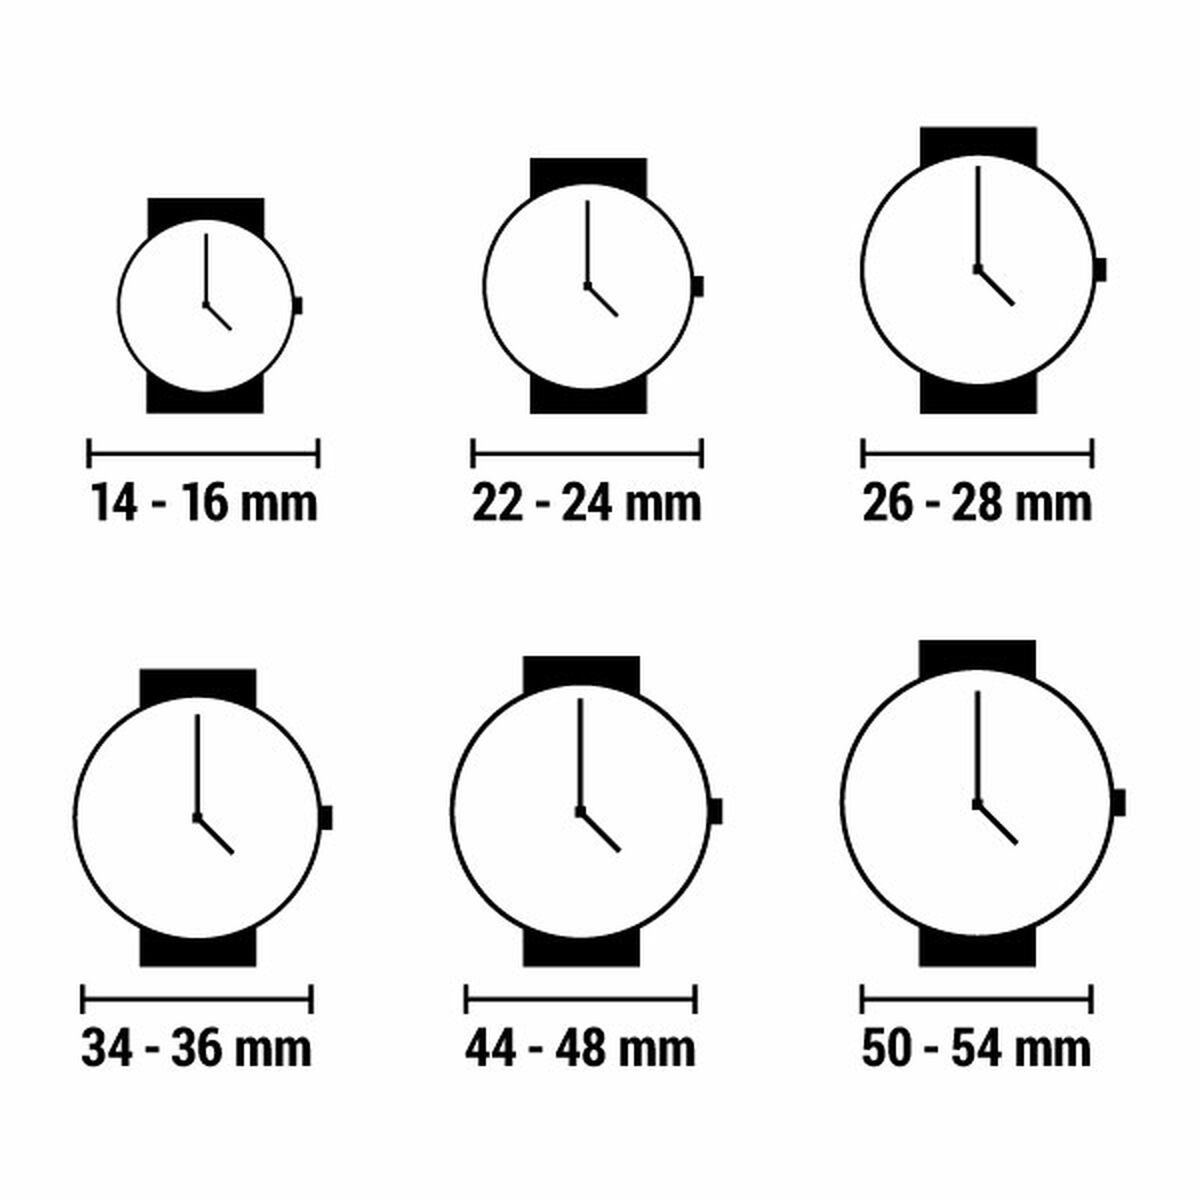 Horloge Dames Breil TW1871 (Ø 35 mm)